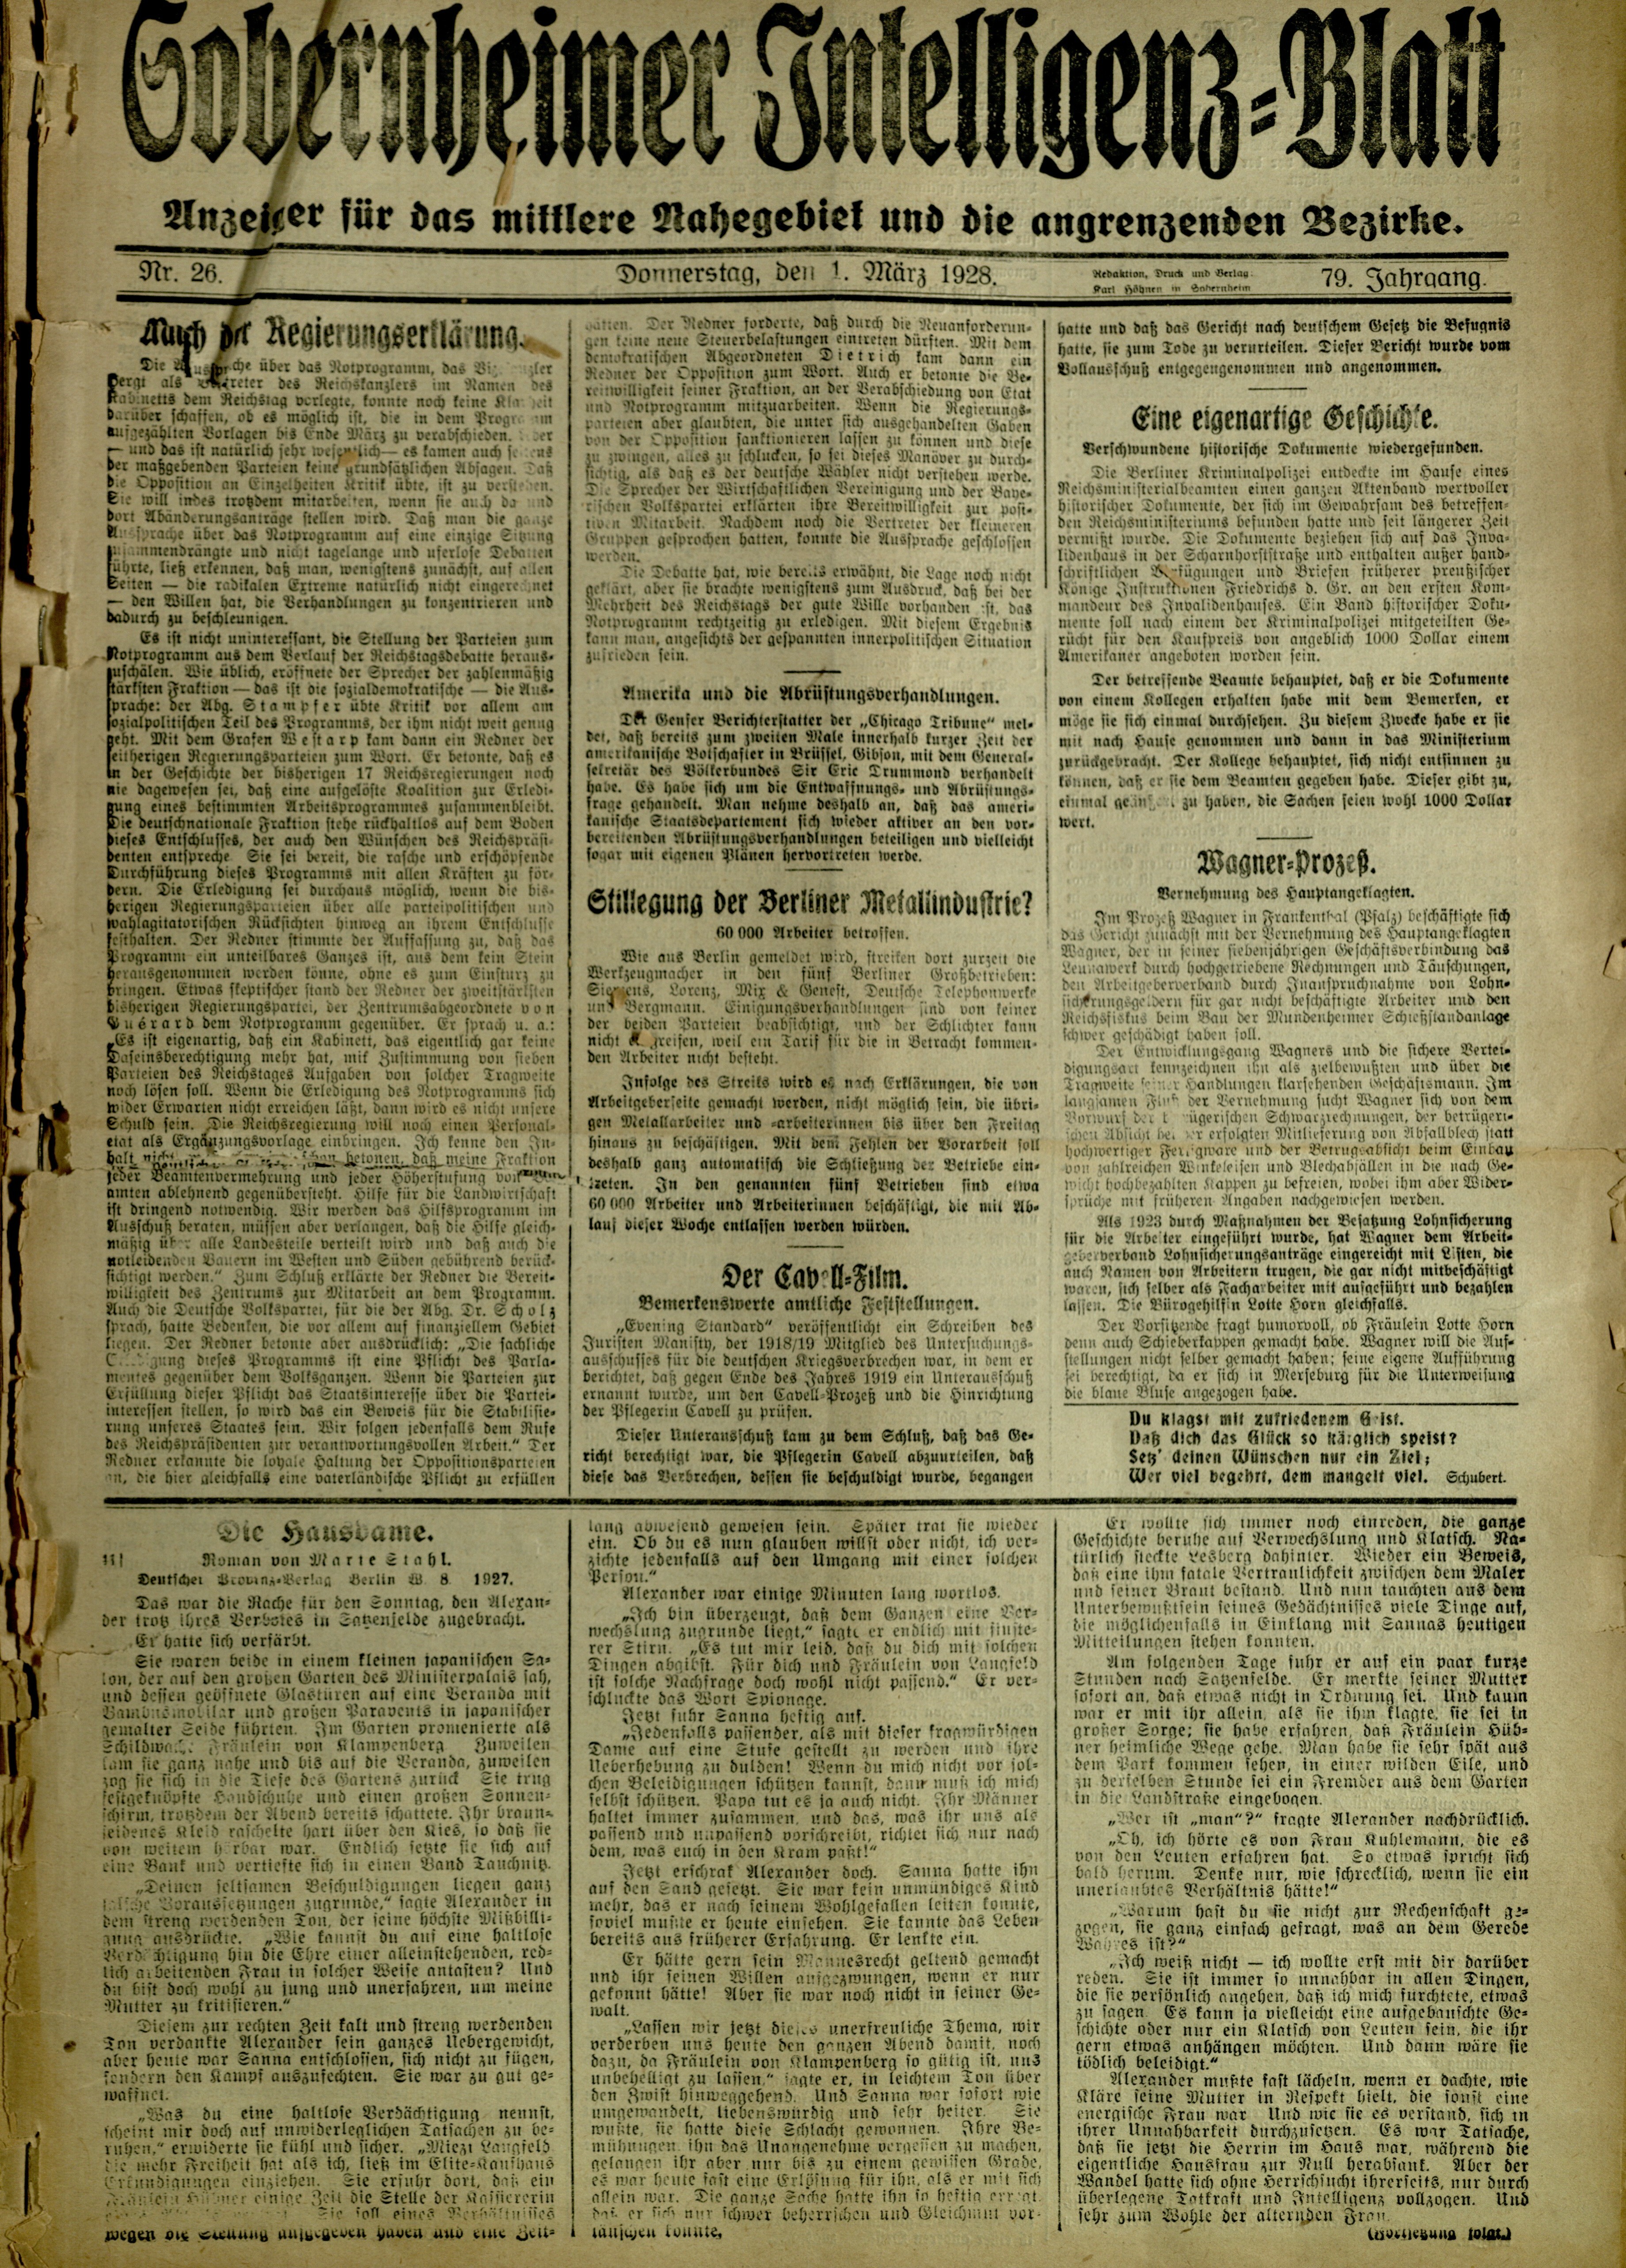 Zeitung: Sobernheimer Intelligenzblatt; März 1928, Jg. 79 Nr. 26 (Heimatmuseum Bad Sobernheim CC BY-NC-SA)